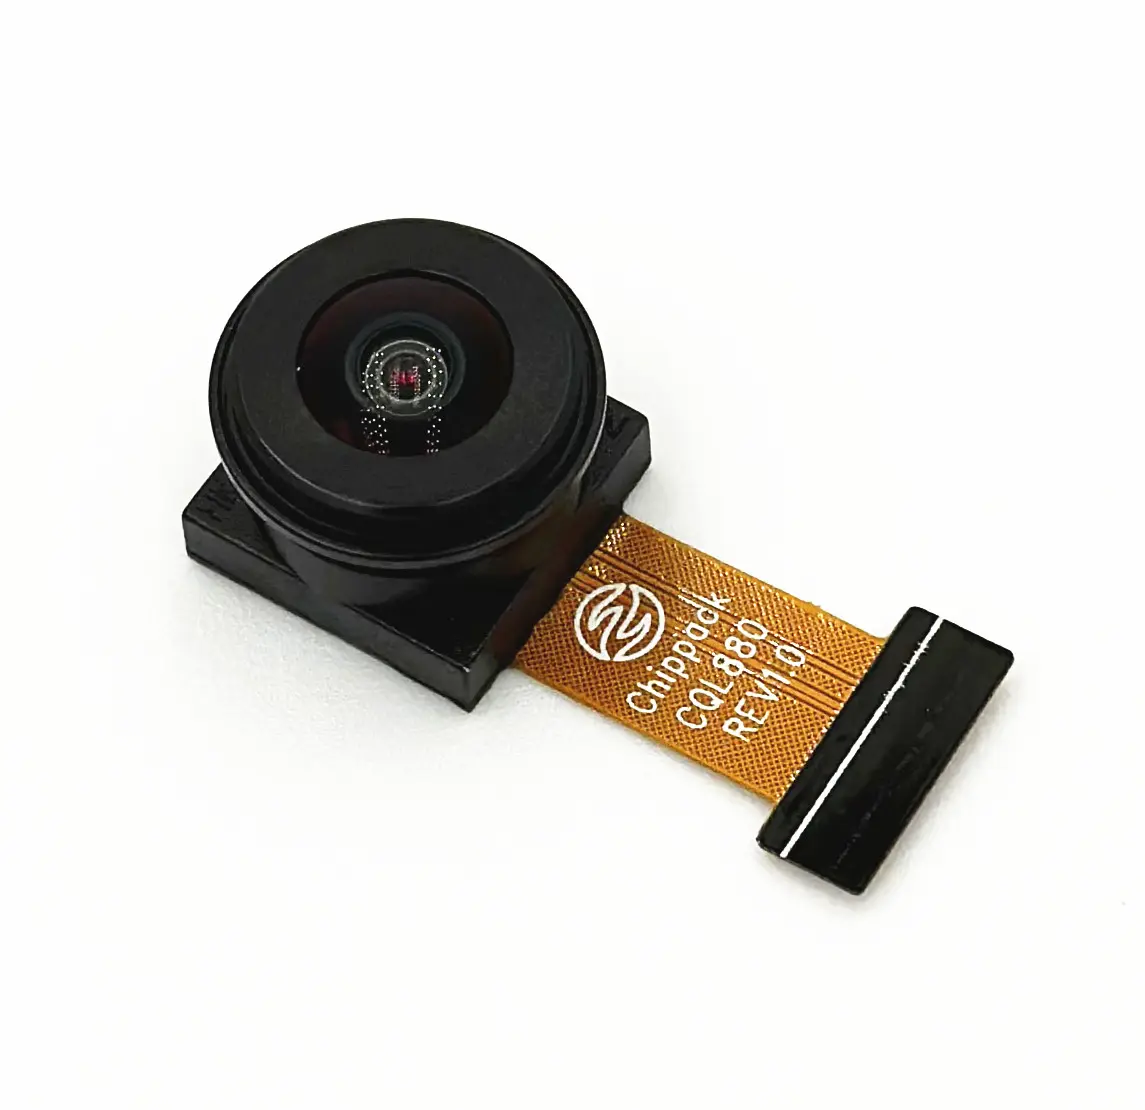 OV5640 AF 5 Million Pixel Mini Camera CMOS Image Sensor Module dvp Interface Automatic Zoom Function Scan Recognition